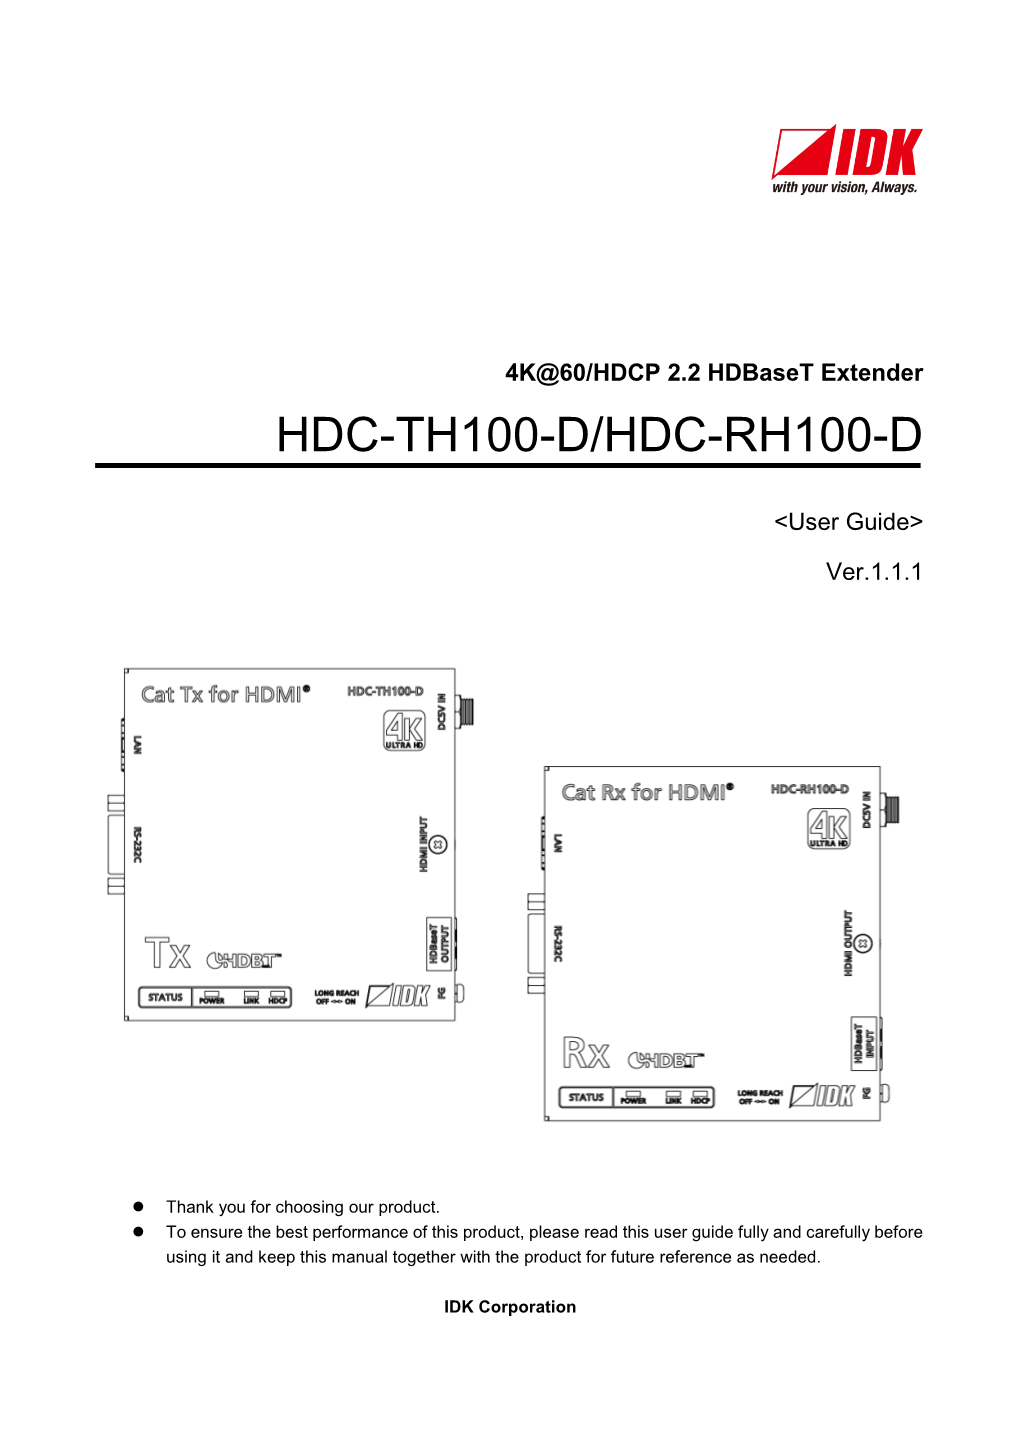 Hdc-Th100-D/Hdc-Rh100-D